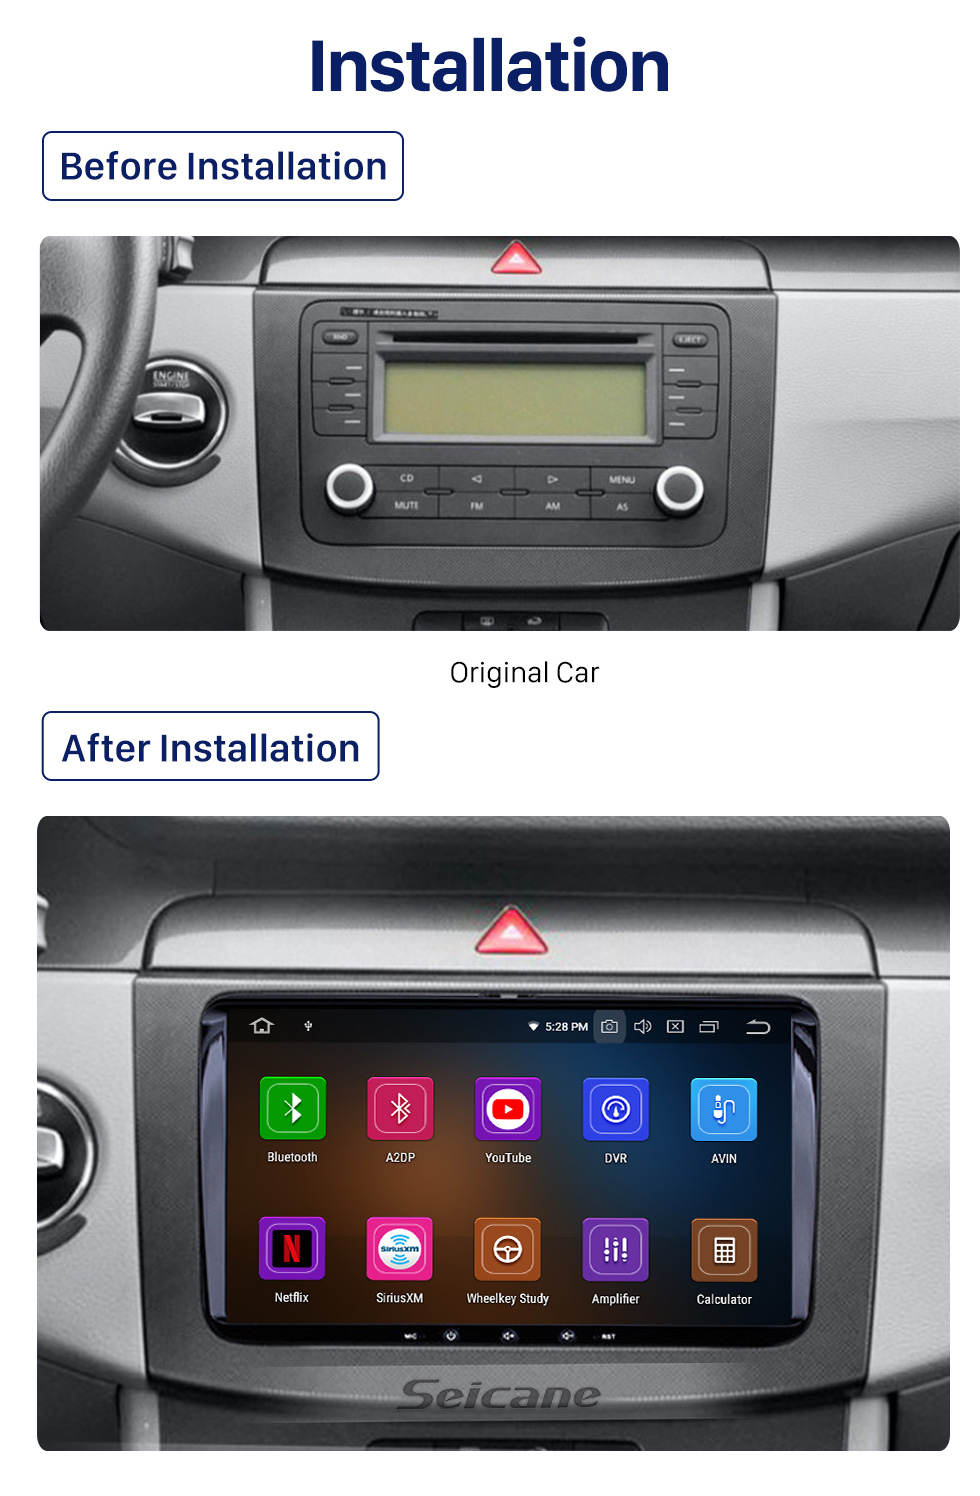 Seicane VW Volkswagen Universal SKODA Seat Android 10.0 In Dash Radio Navigation System with DVD Player 3G WiFi Bluetooth Steering wheel control Mirror Link